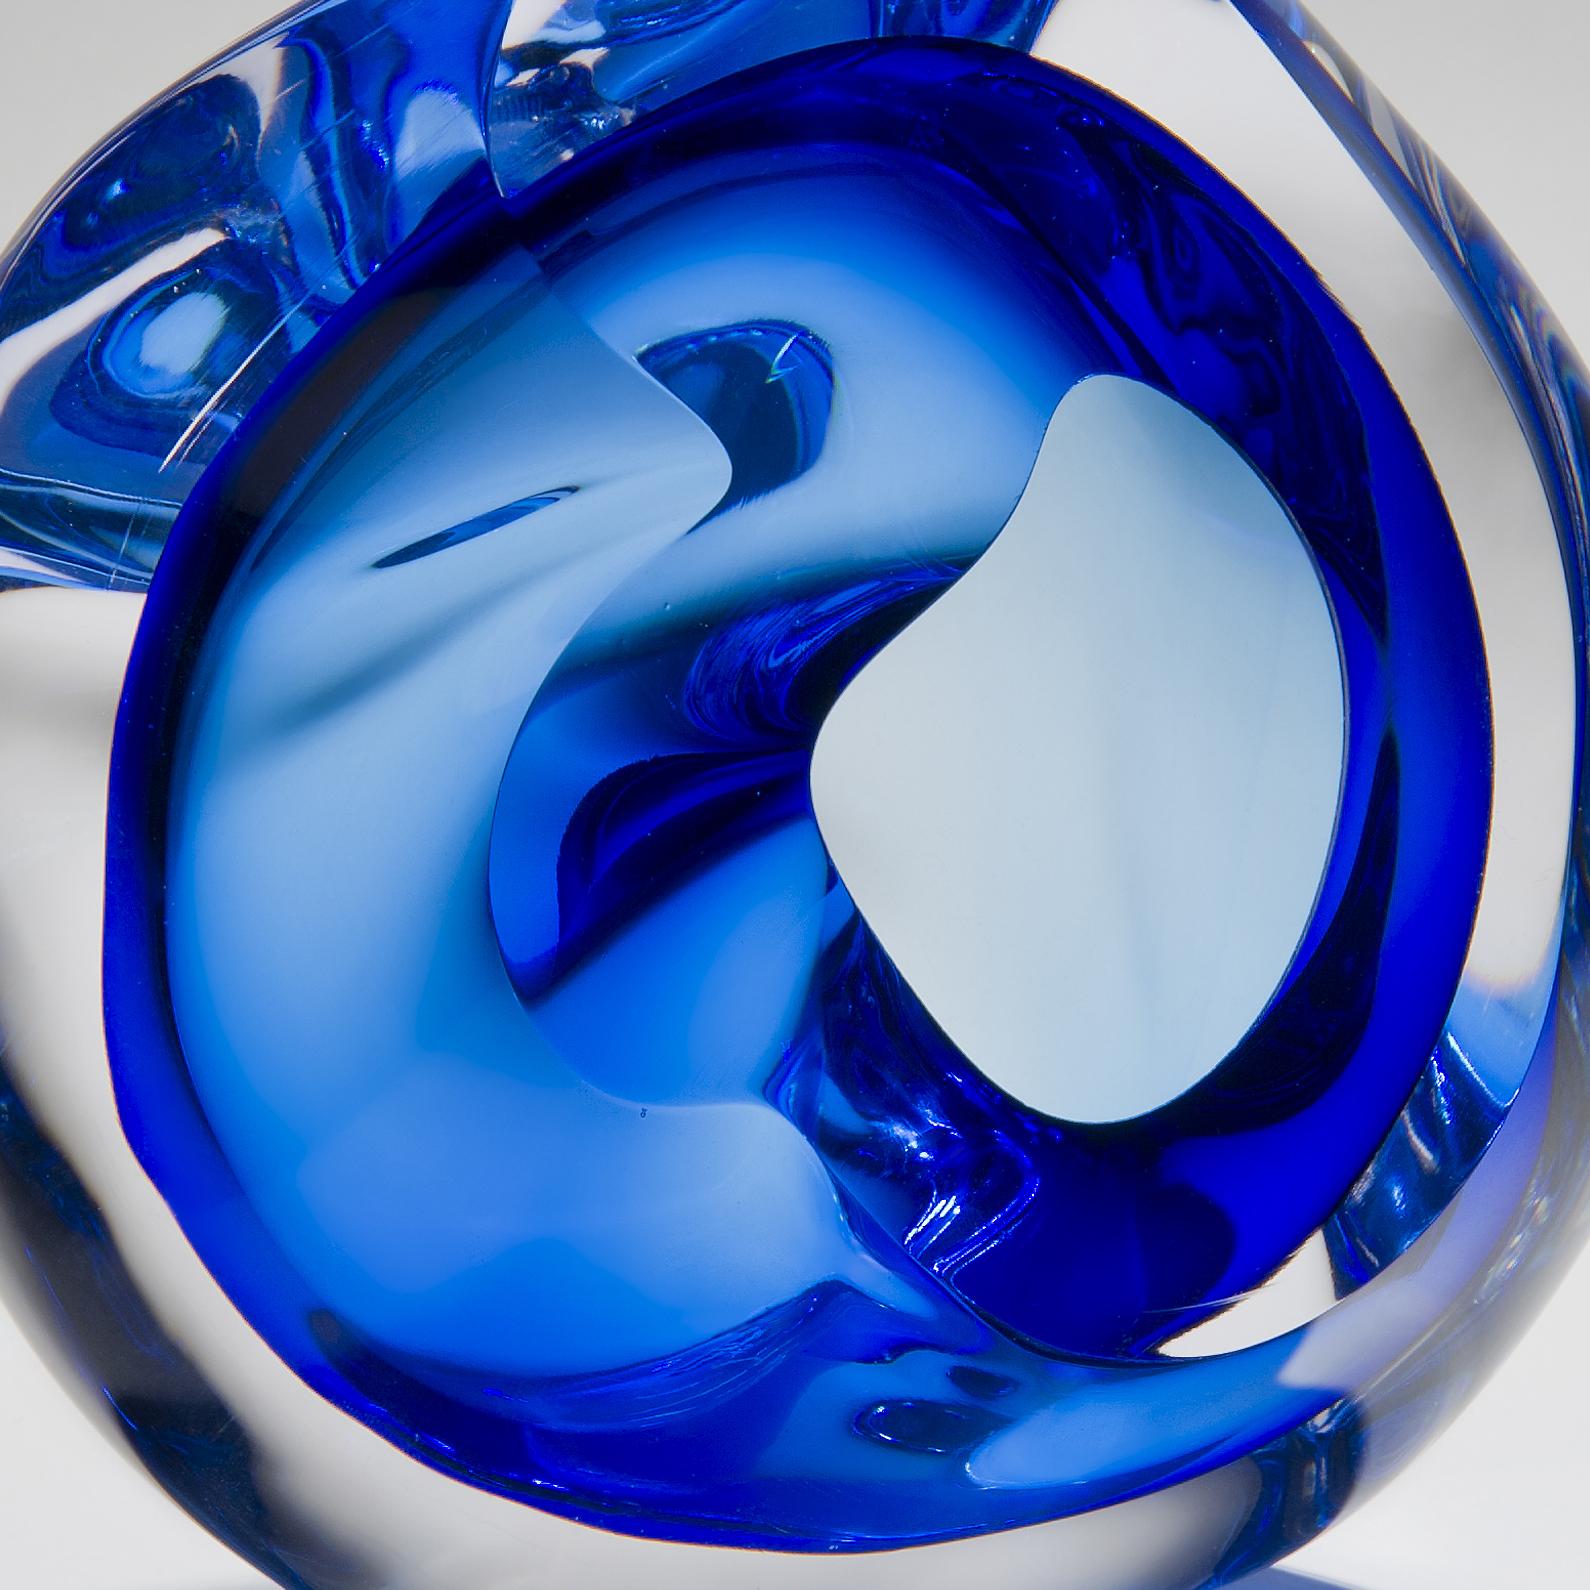 British Vug in Blue, a Unique Glass Sculpture by Samantha Donaldson